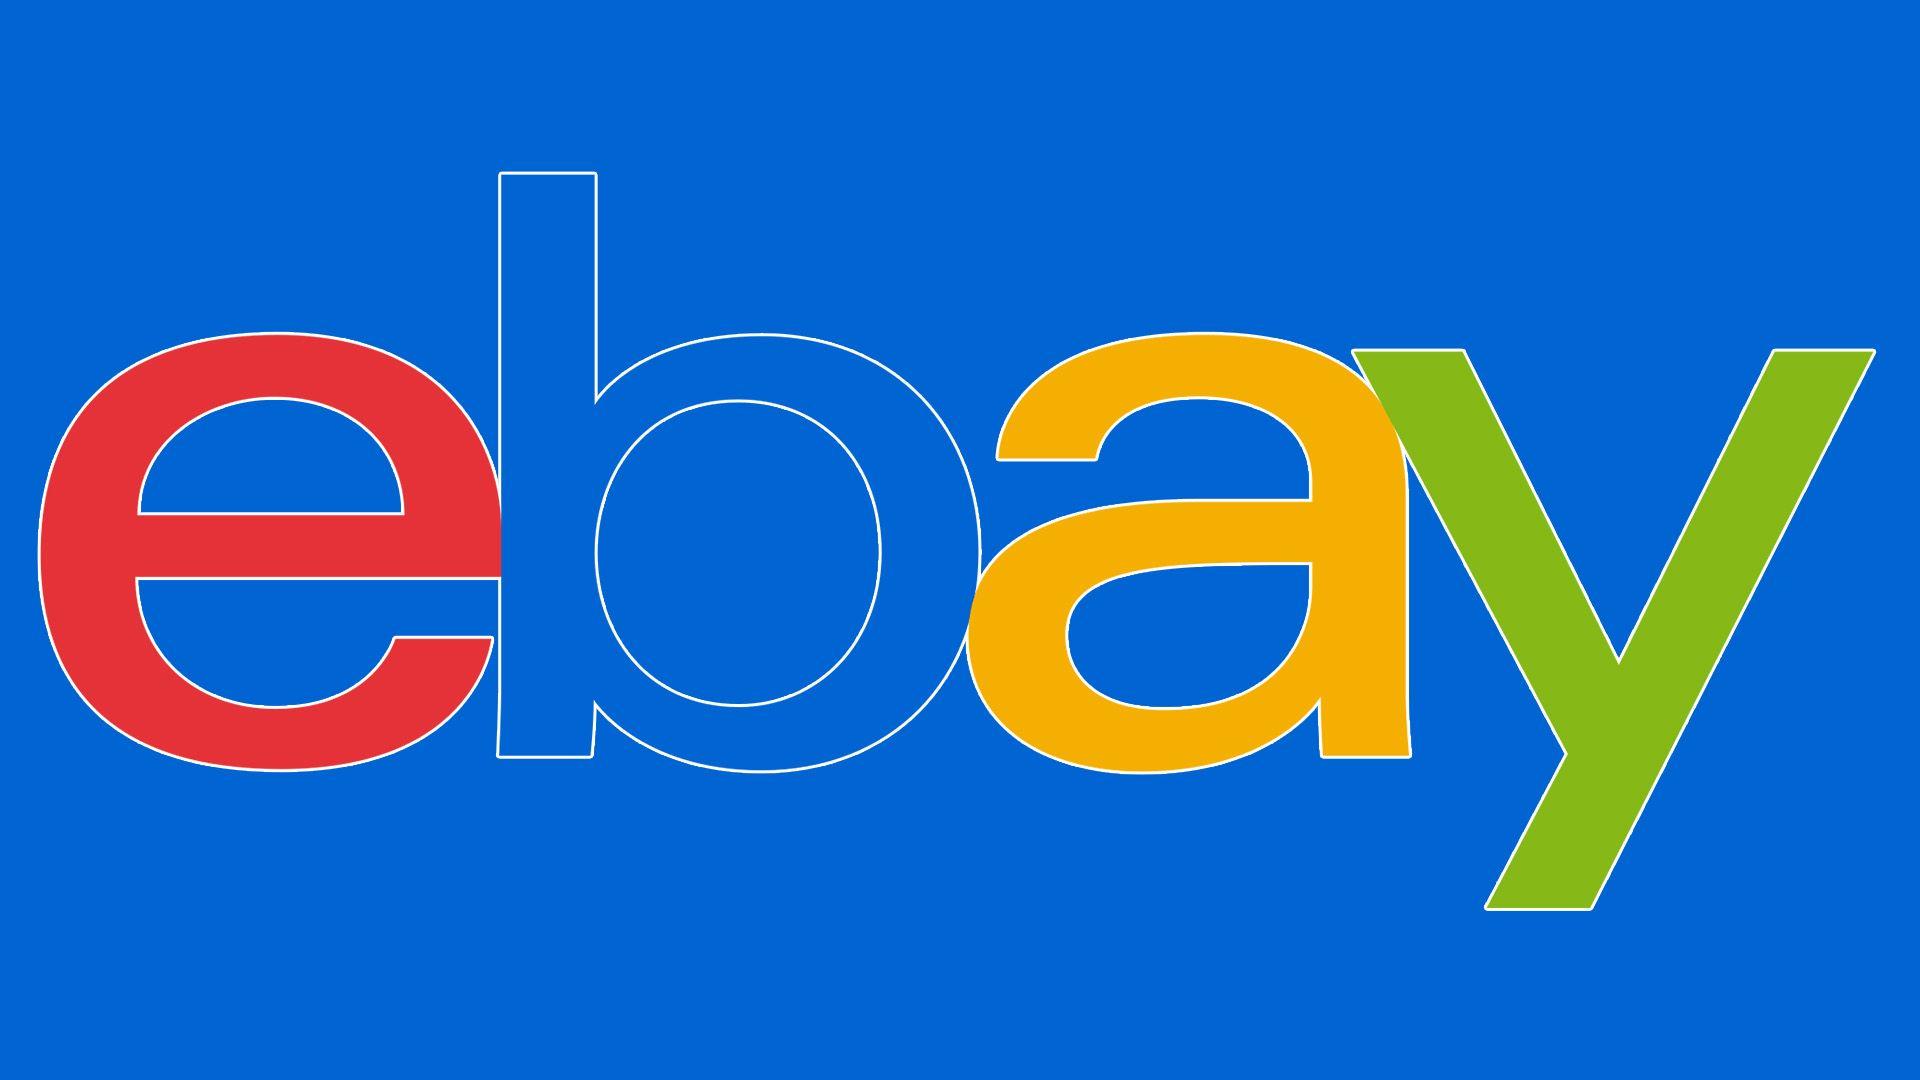 eBay Official Logo - eBay logo, symbol, meaning, History and Evolution